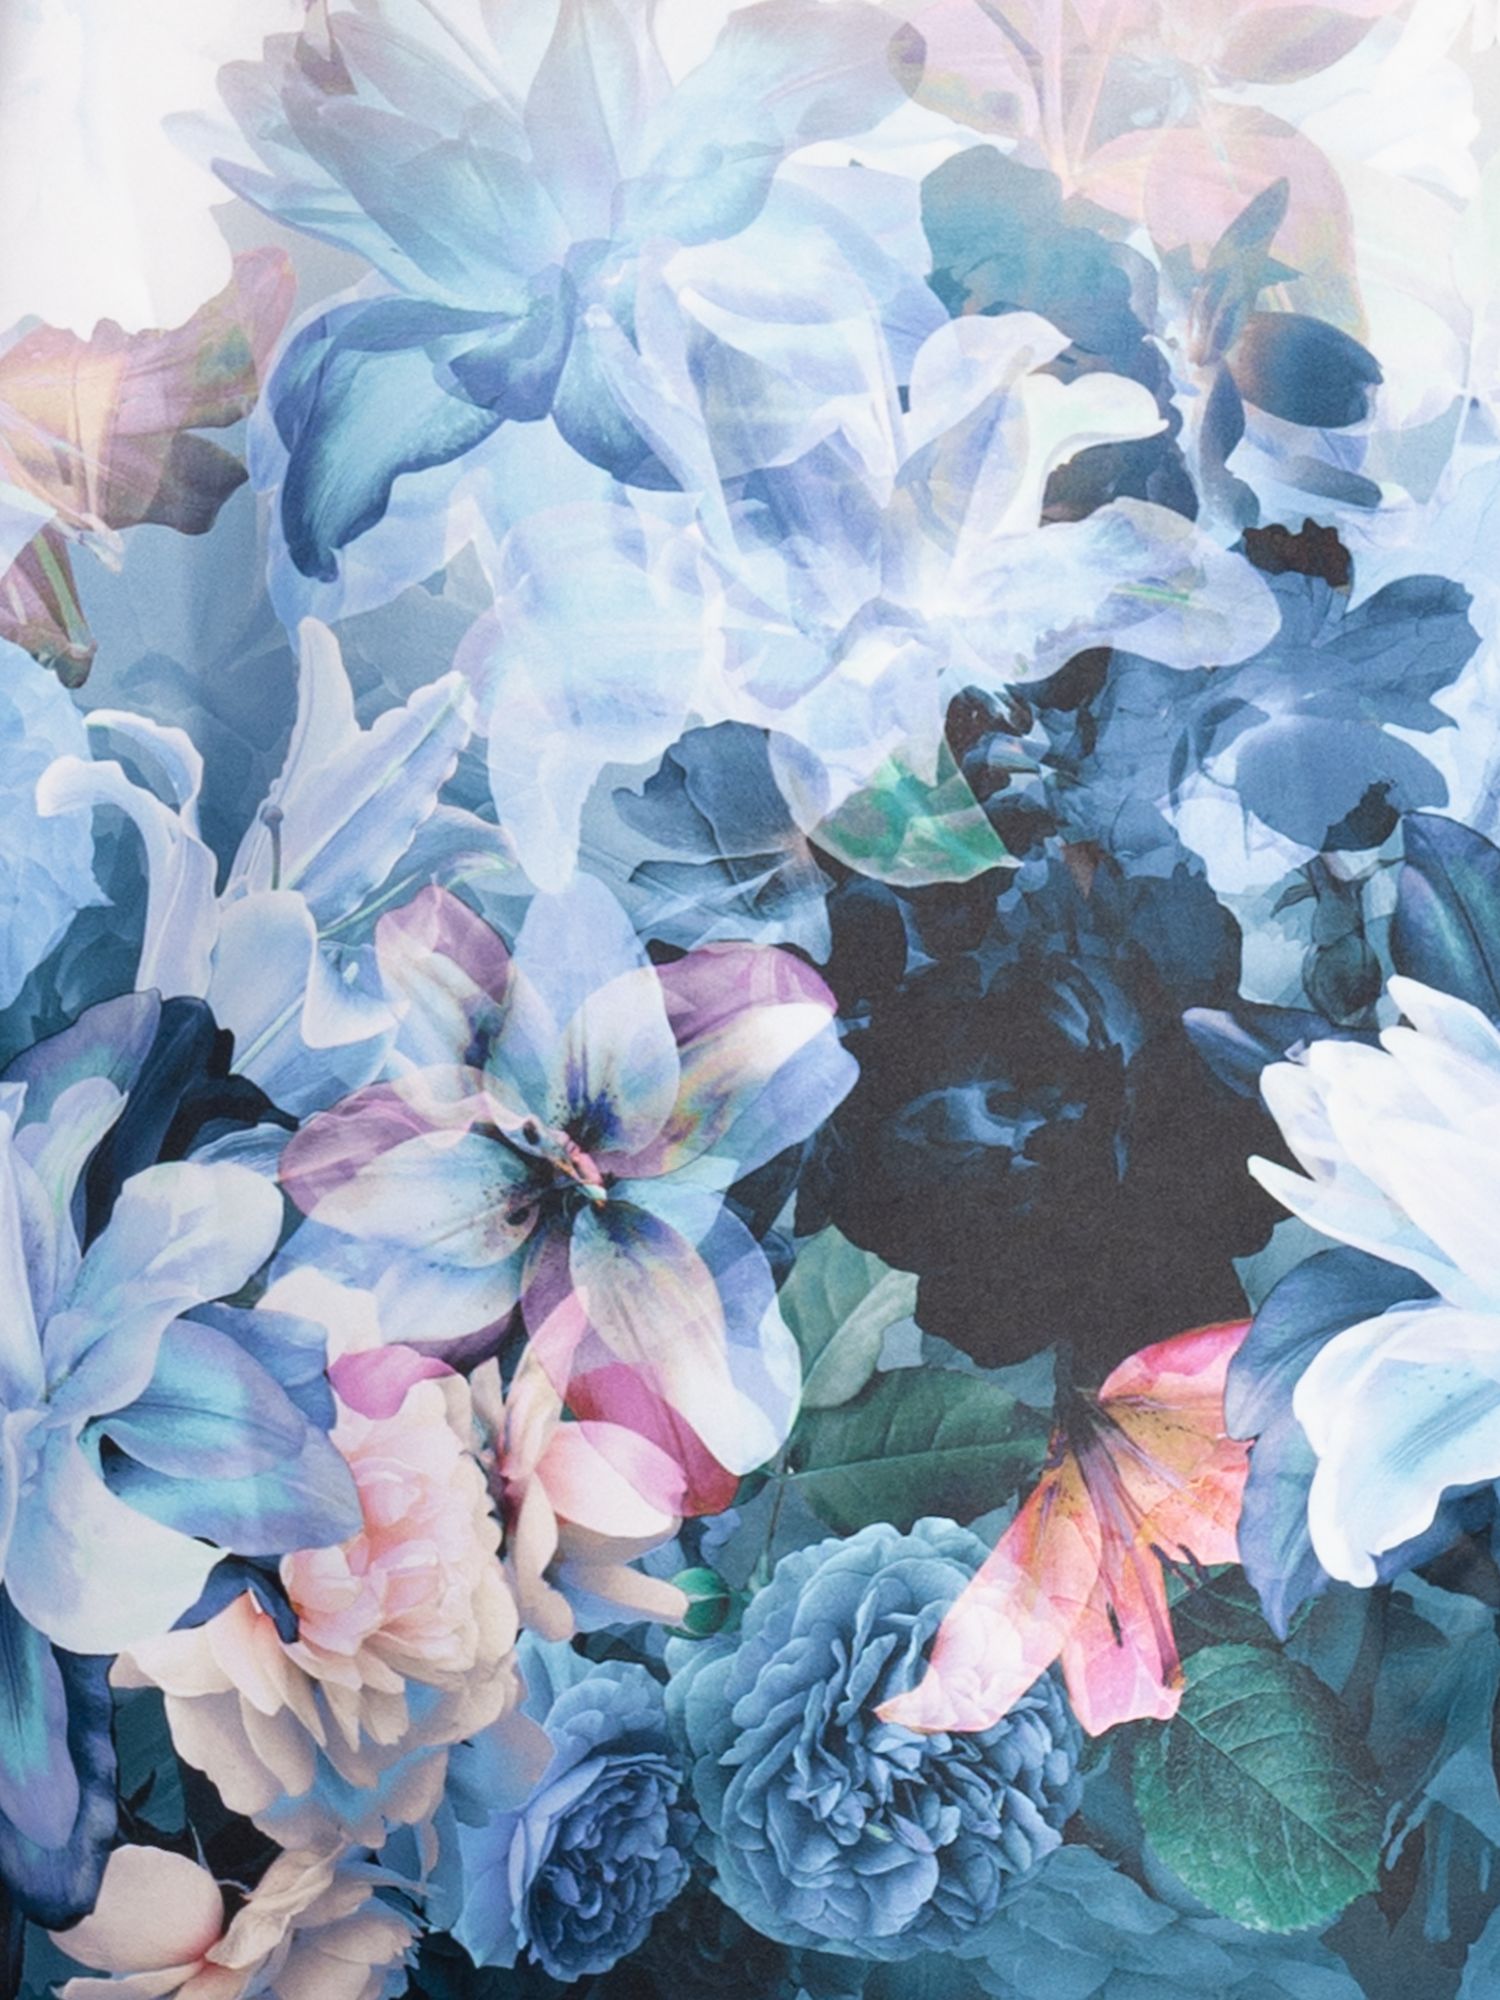 chesca Longline Floral Satin Coat, Lilac/Blue, 12-14